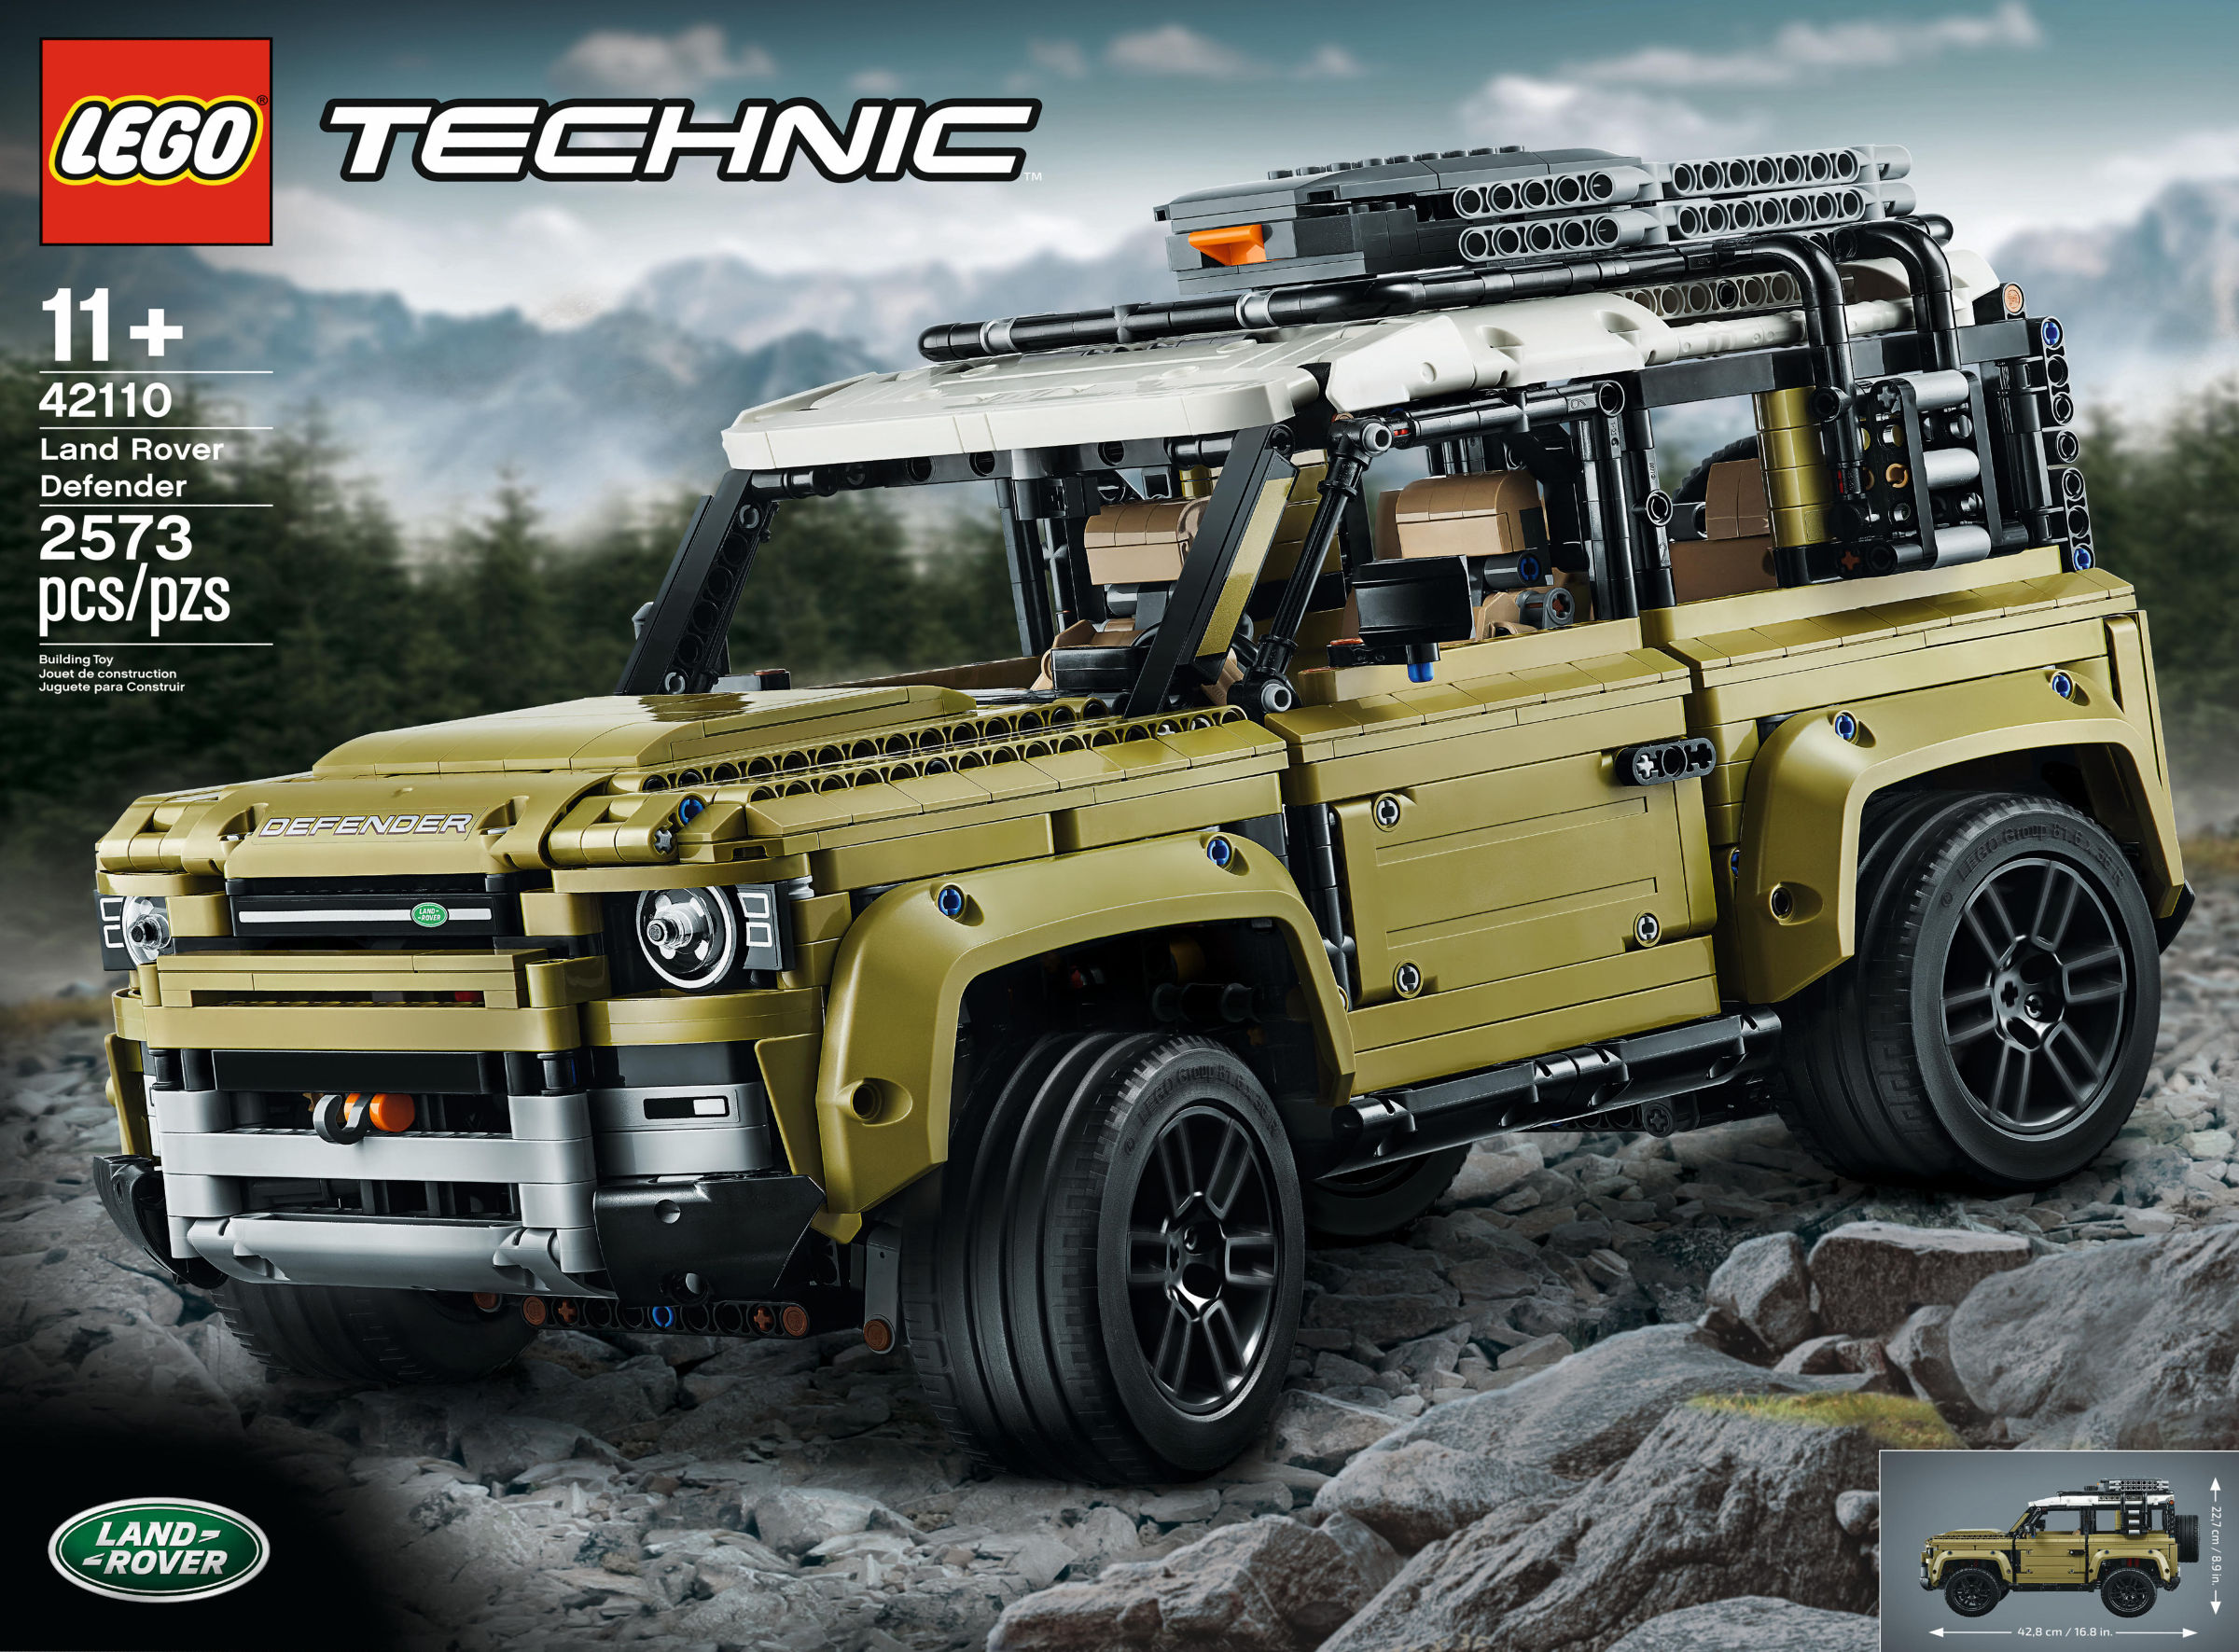 the Technic Land Rover Defender | Brickset